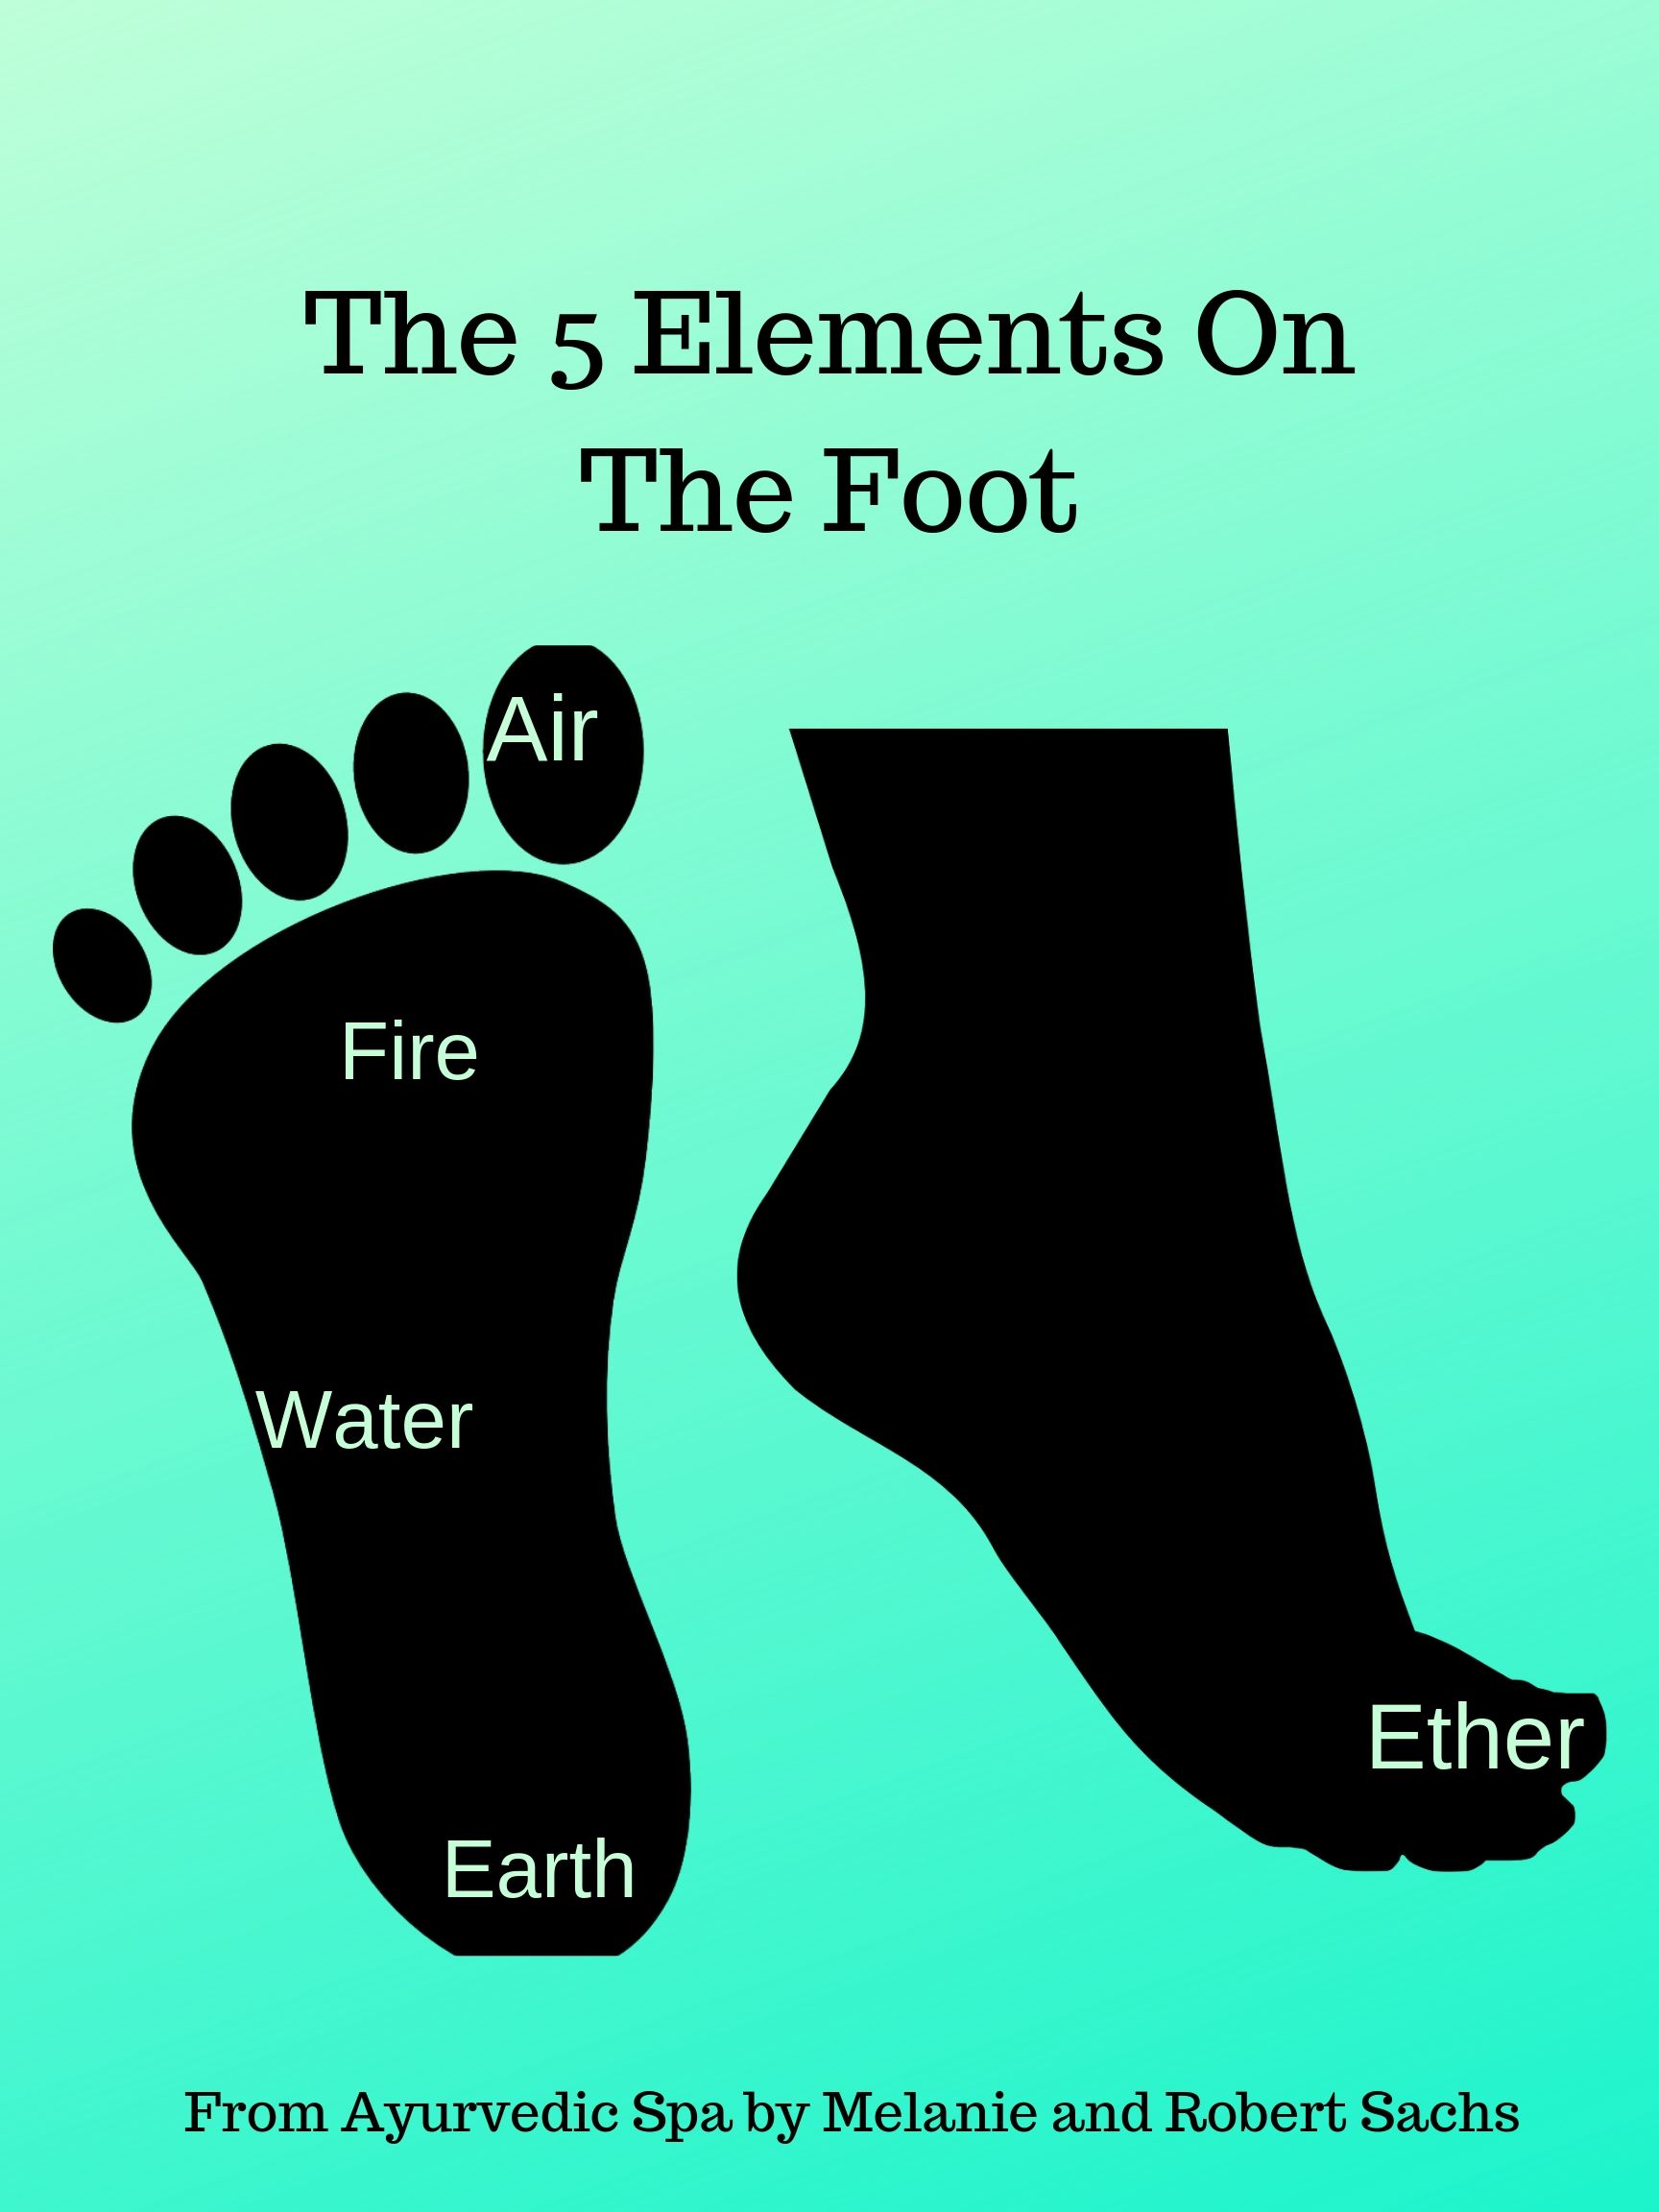 Massage your feet help balance the elements.